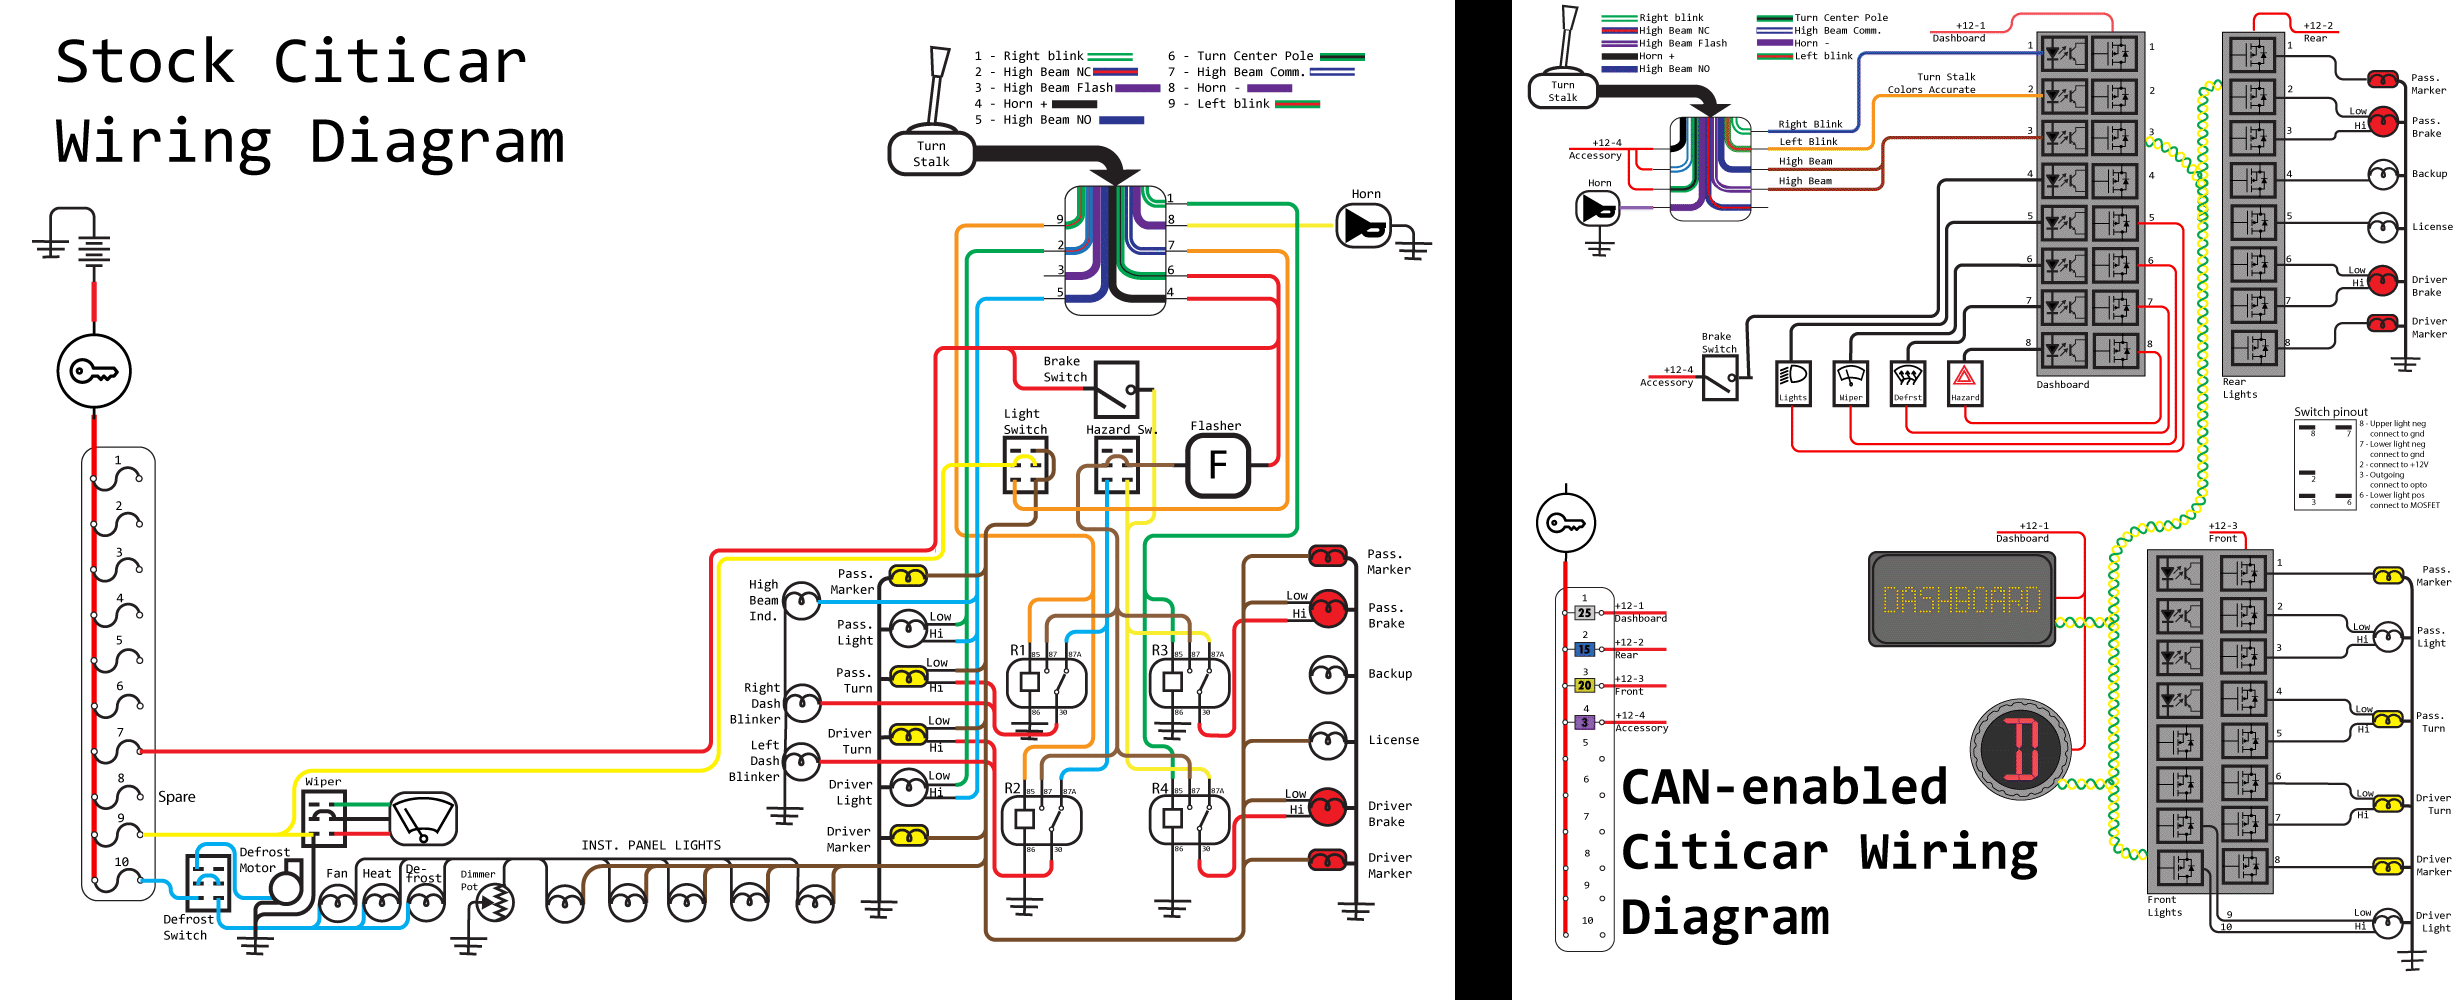 A comparison between two schematics